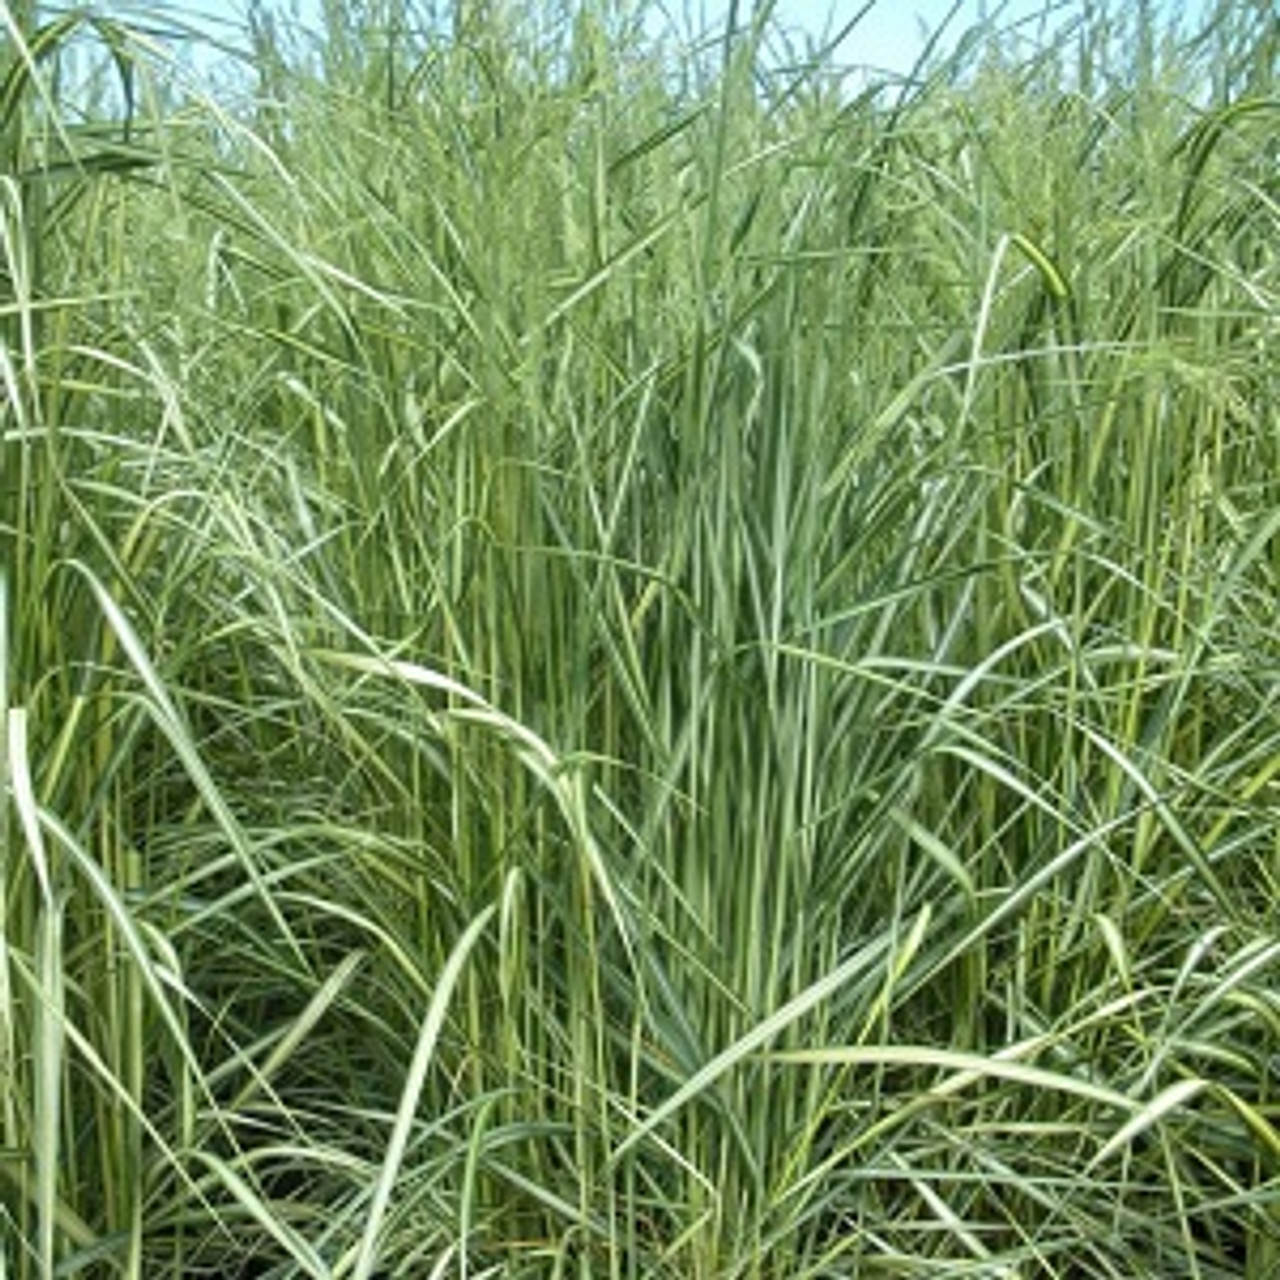 ElDorado Feather Reed Grass Ornamental Grass